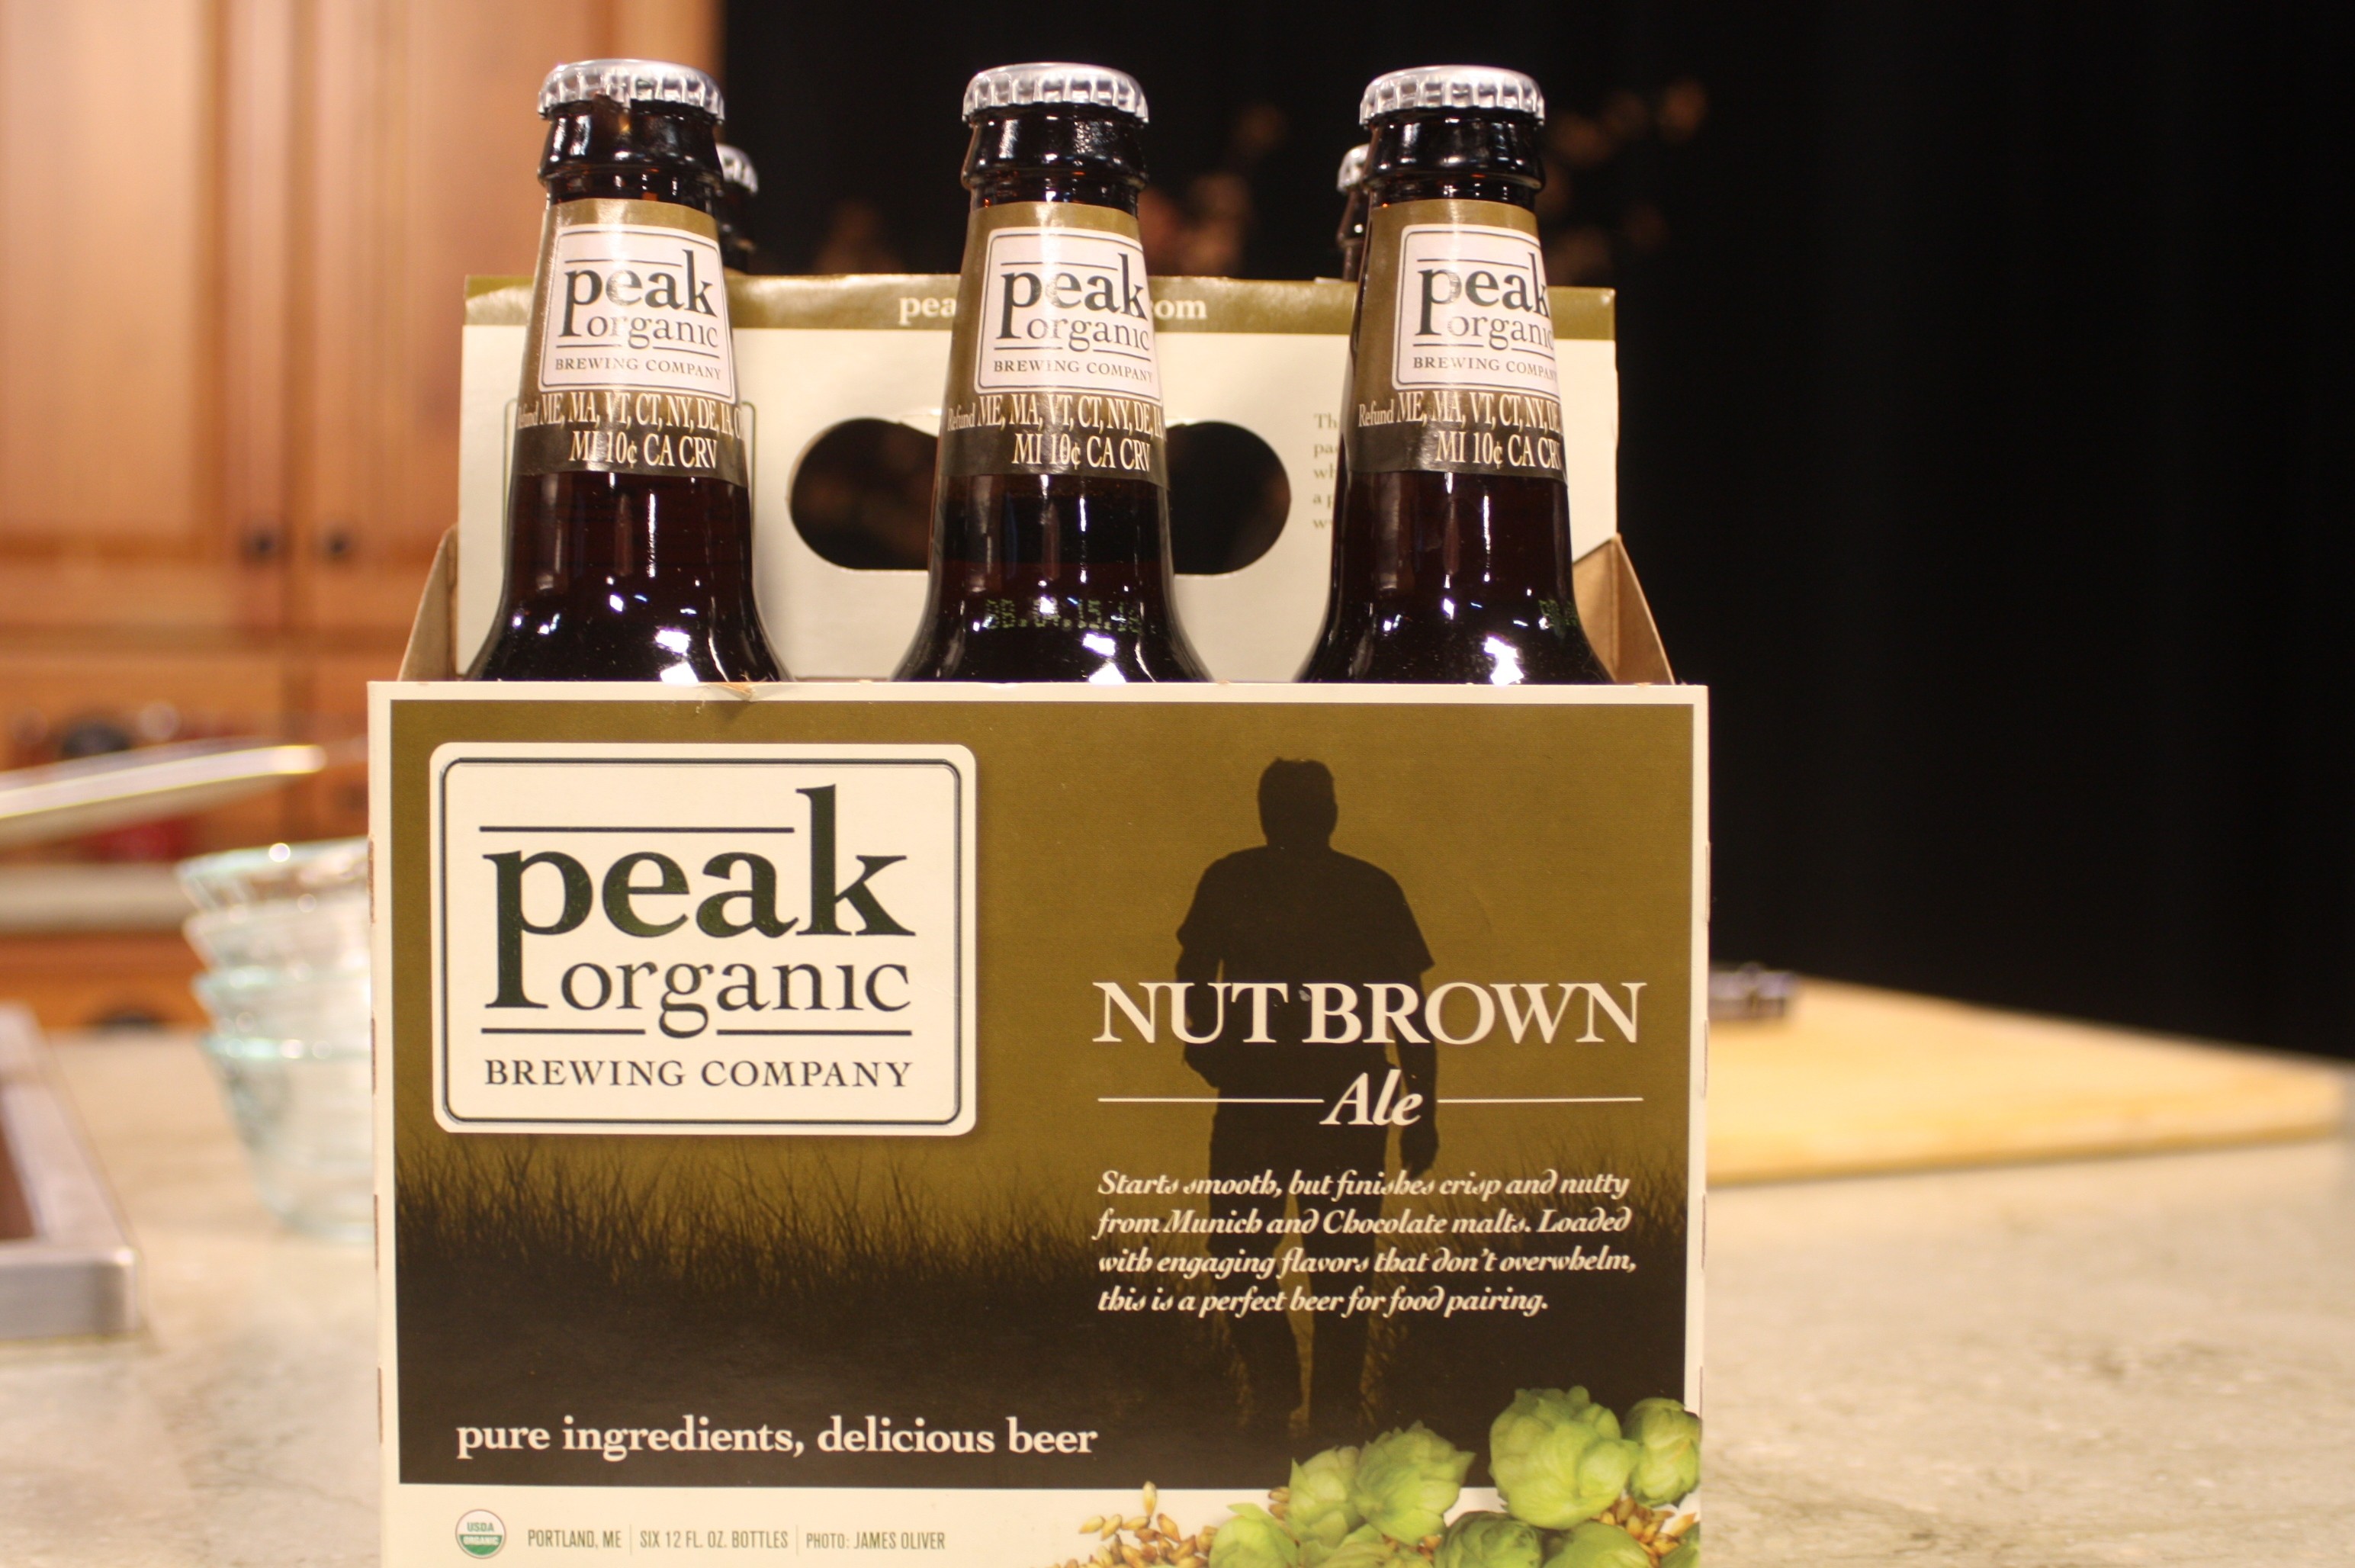 Peak Organic Brewing Company